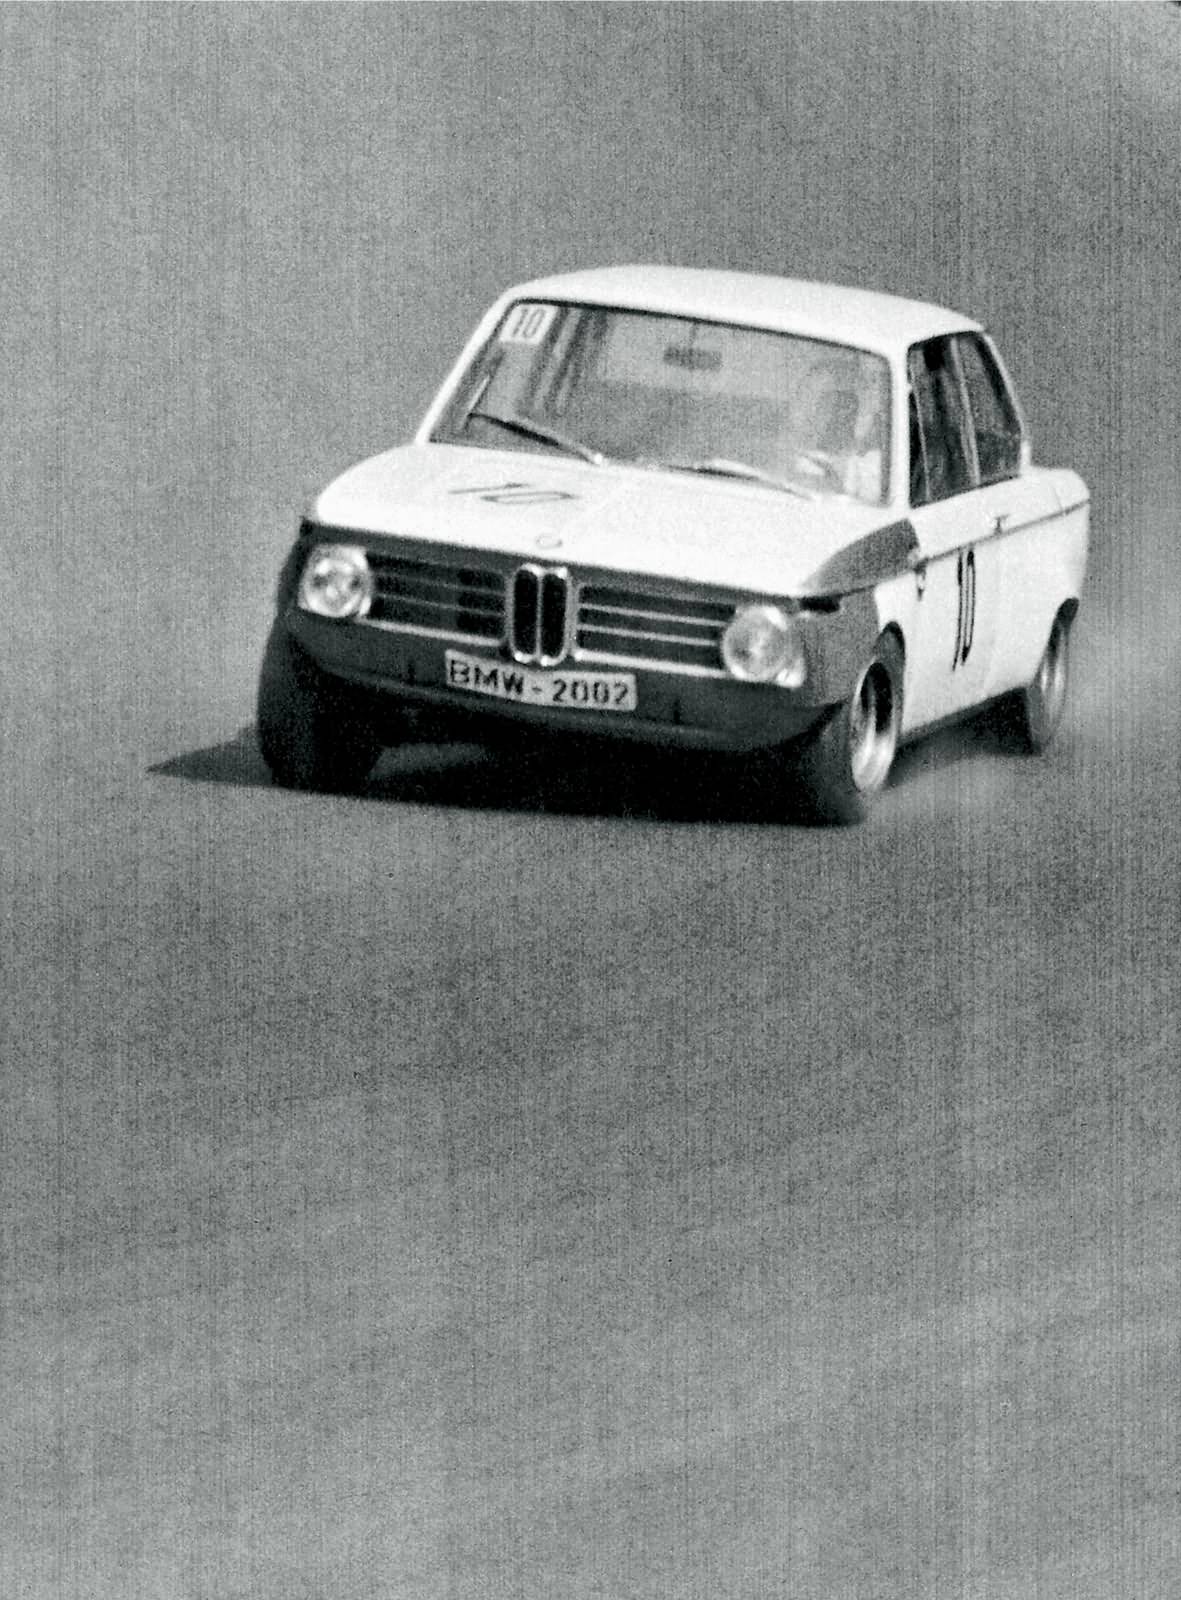 BMW 2002 am Nürburgring 1968